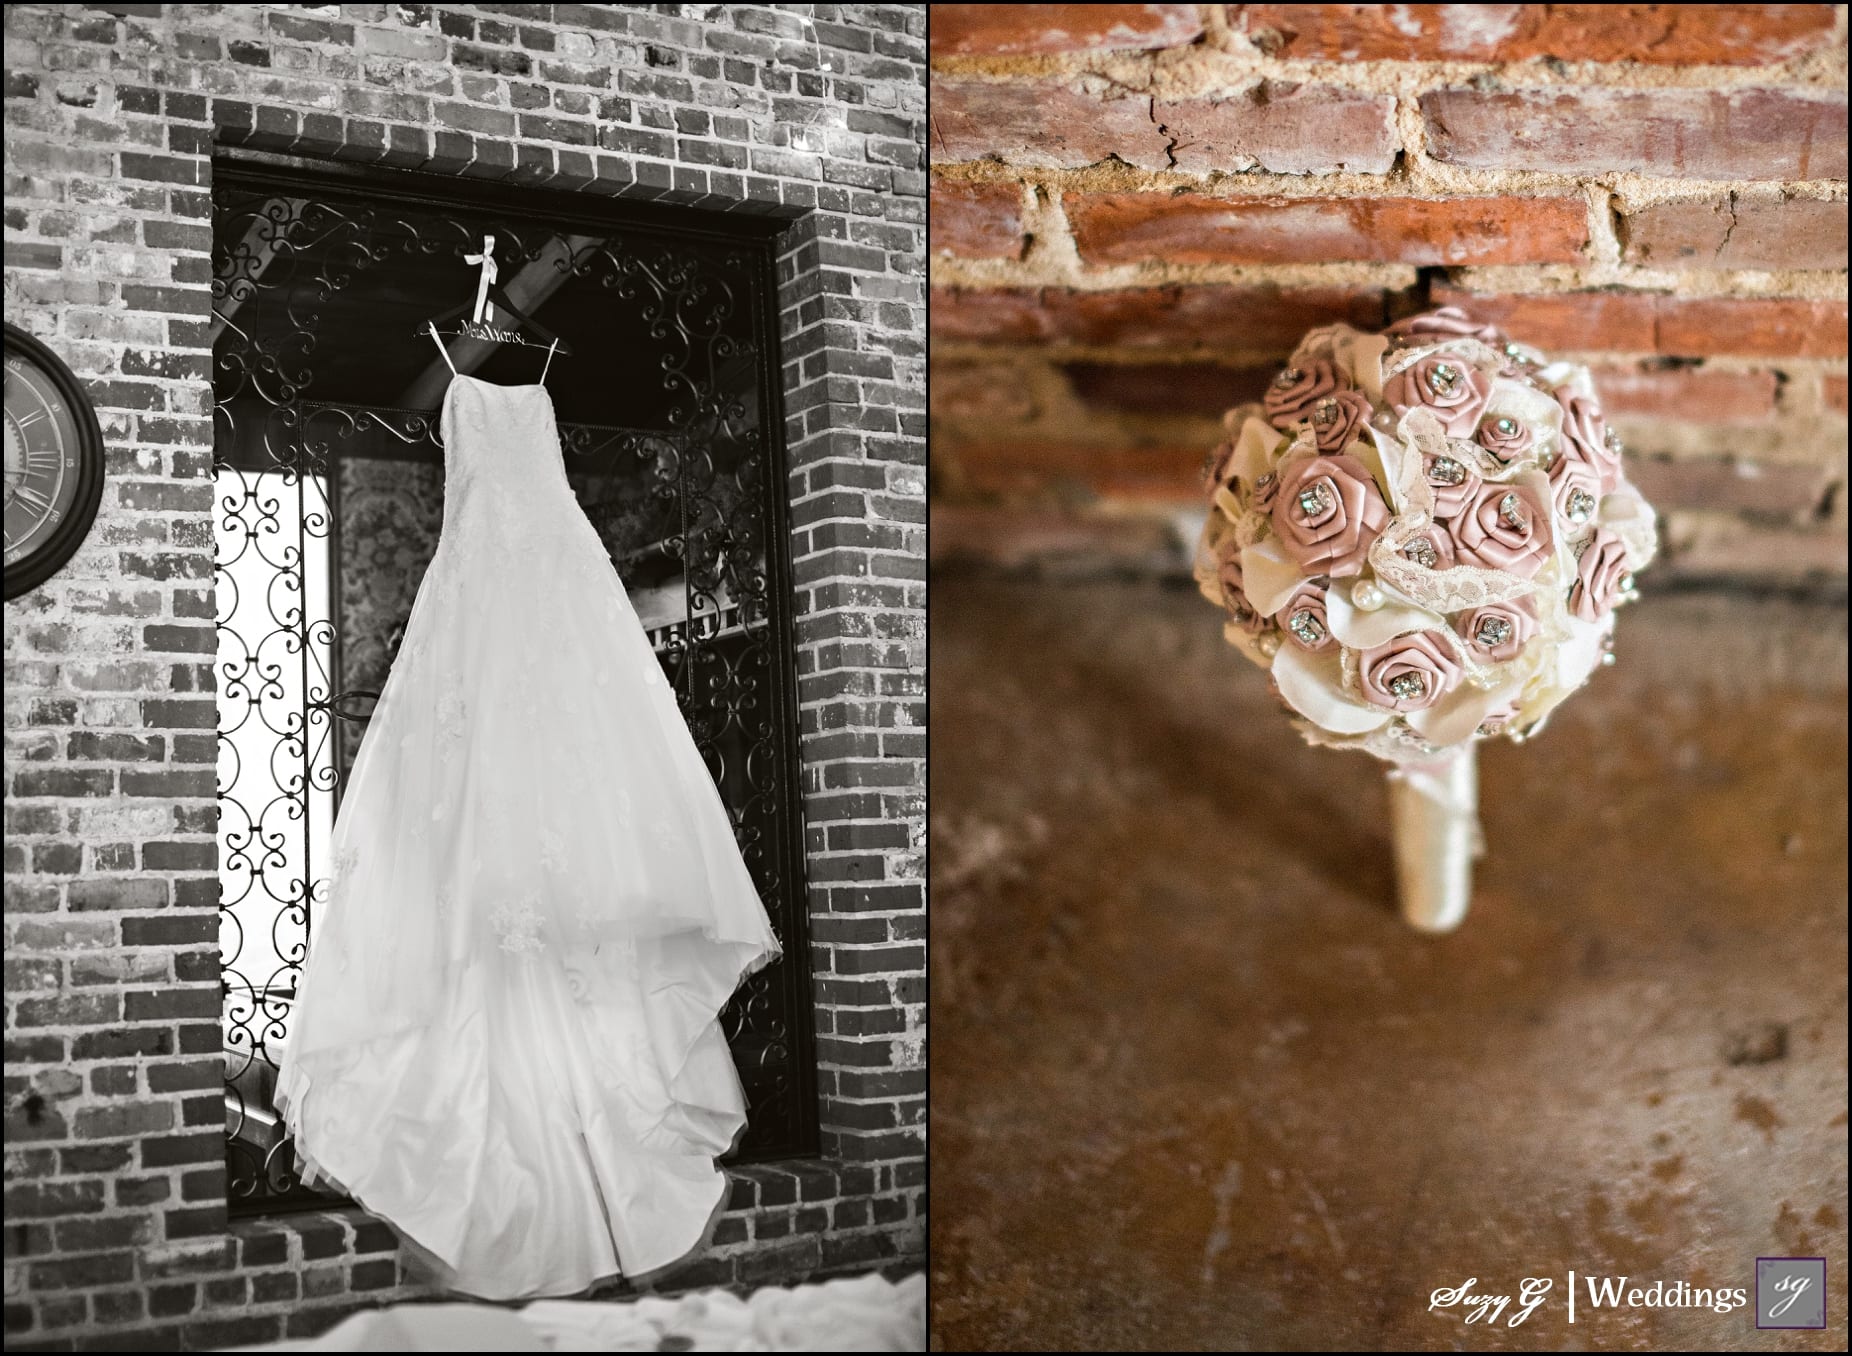 Amanda & Aaron ~ Point-Aux-Loups Springs Ballroom ~ Louisiana Wedding  Photography ~ Suzy G ~ New Orleans & Louisiana Wedding Photography